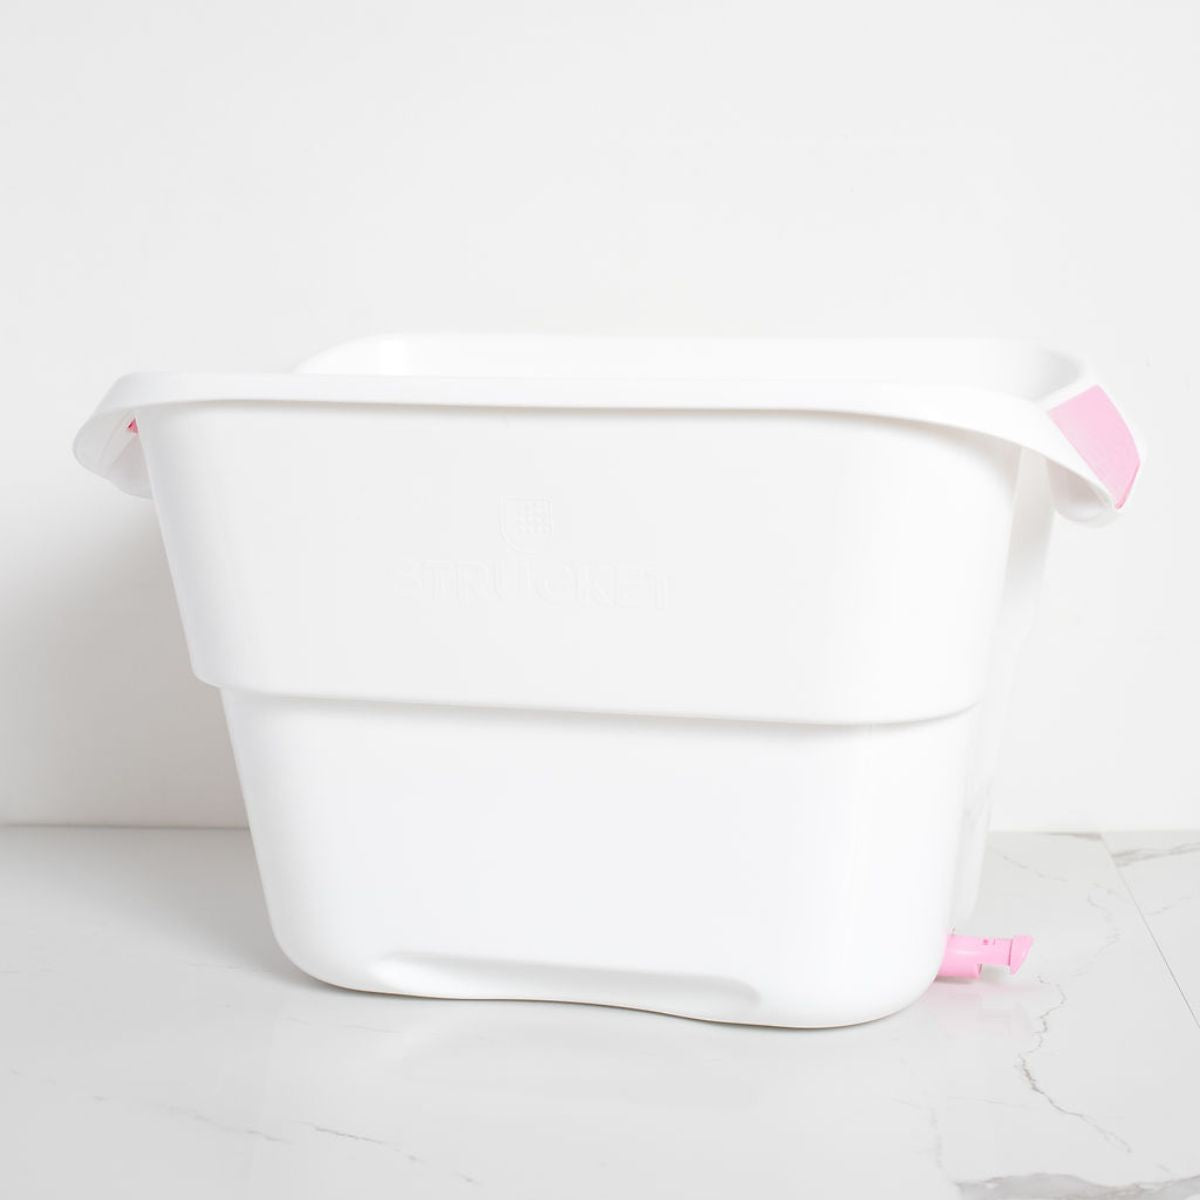 Spare 19L Bucket  - Strucket, color_Pink